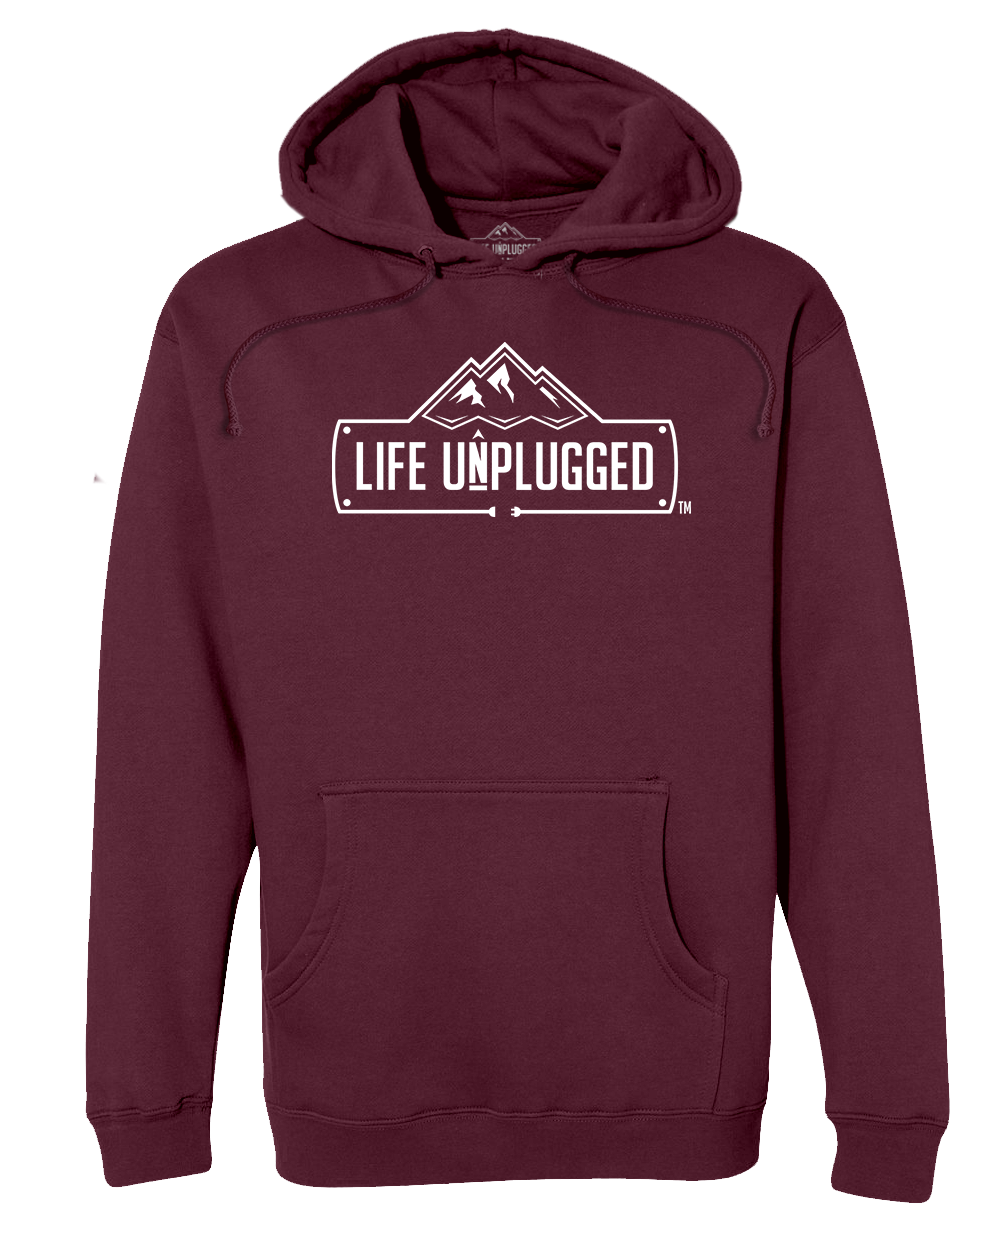 LIFE UNPLUGGED LOGO Premium Heavyweight Hooded Sweatshirt